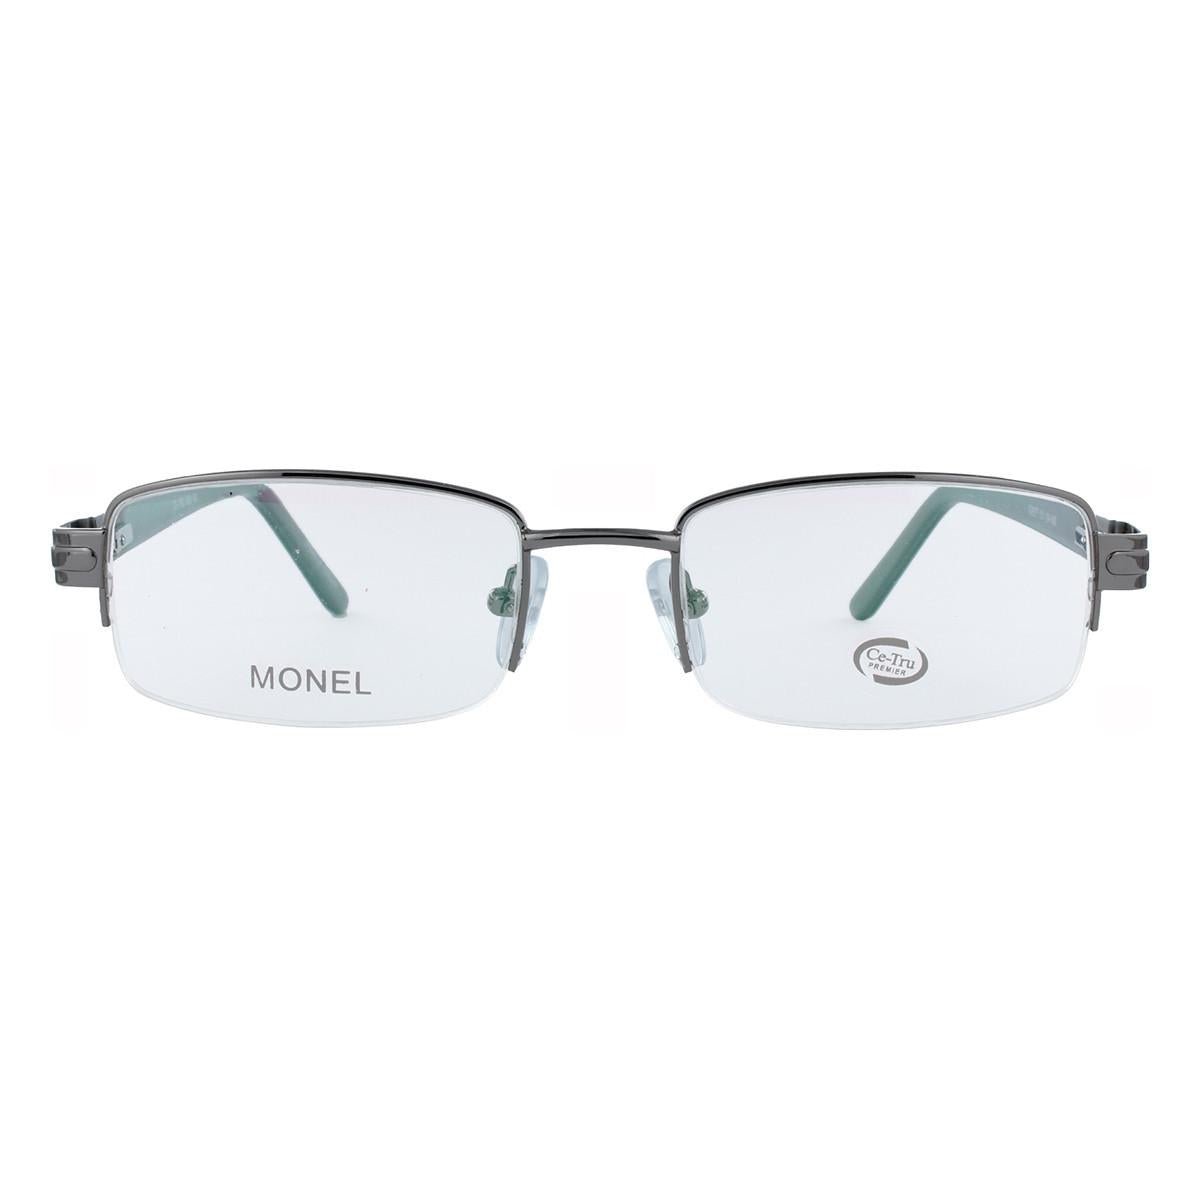 CE-TRU 808 Eyeglasses